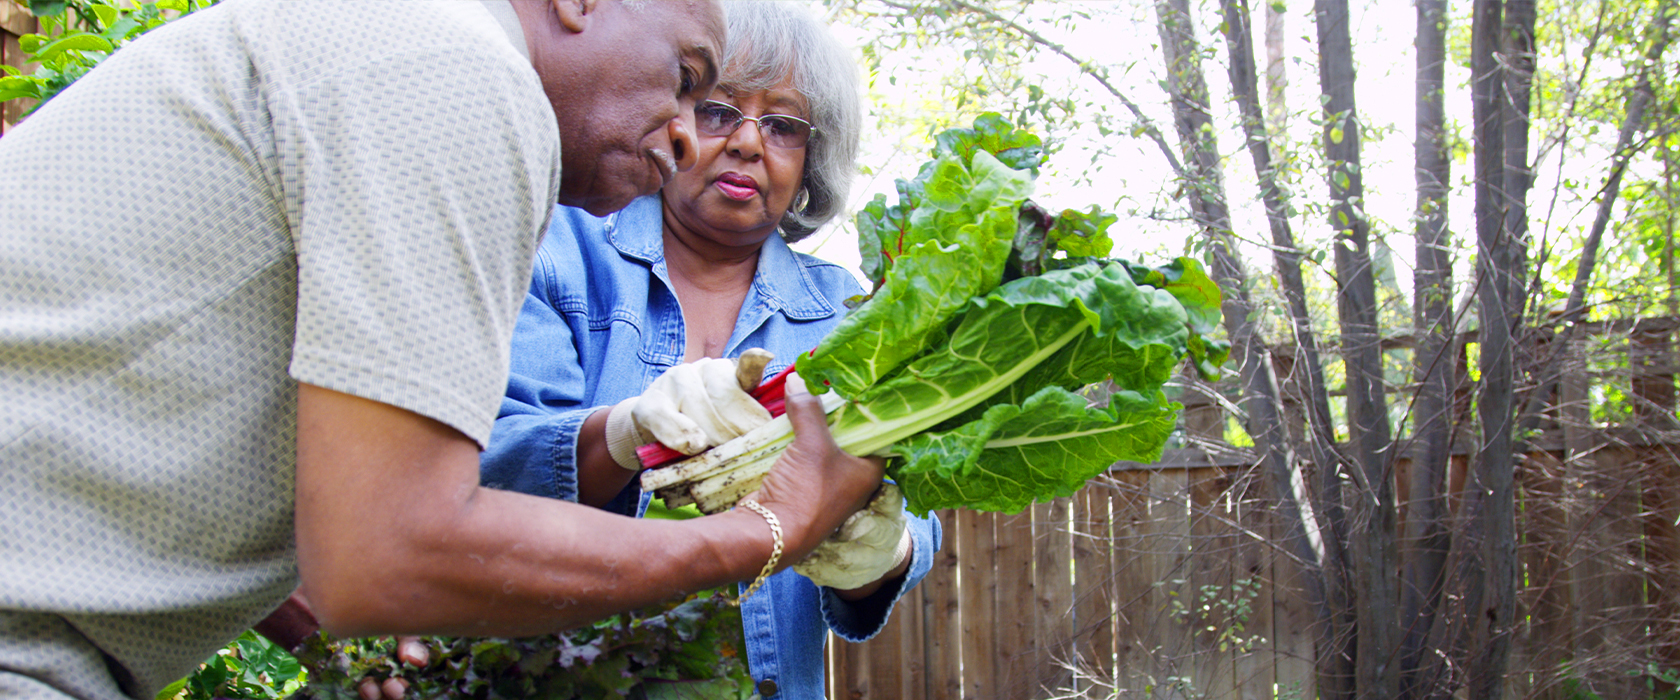 gardening tips for seniors low maintenance 